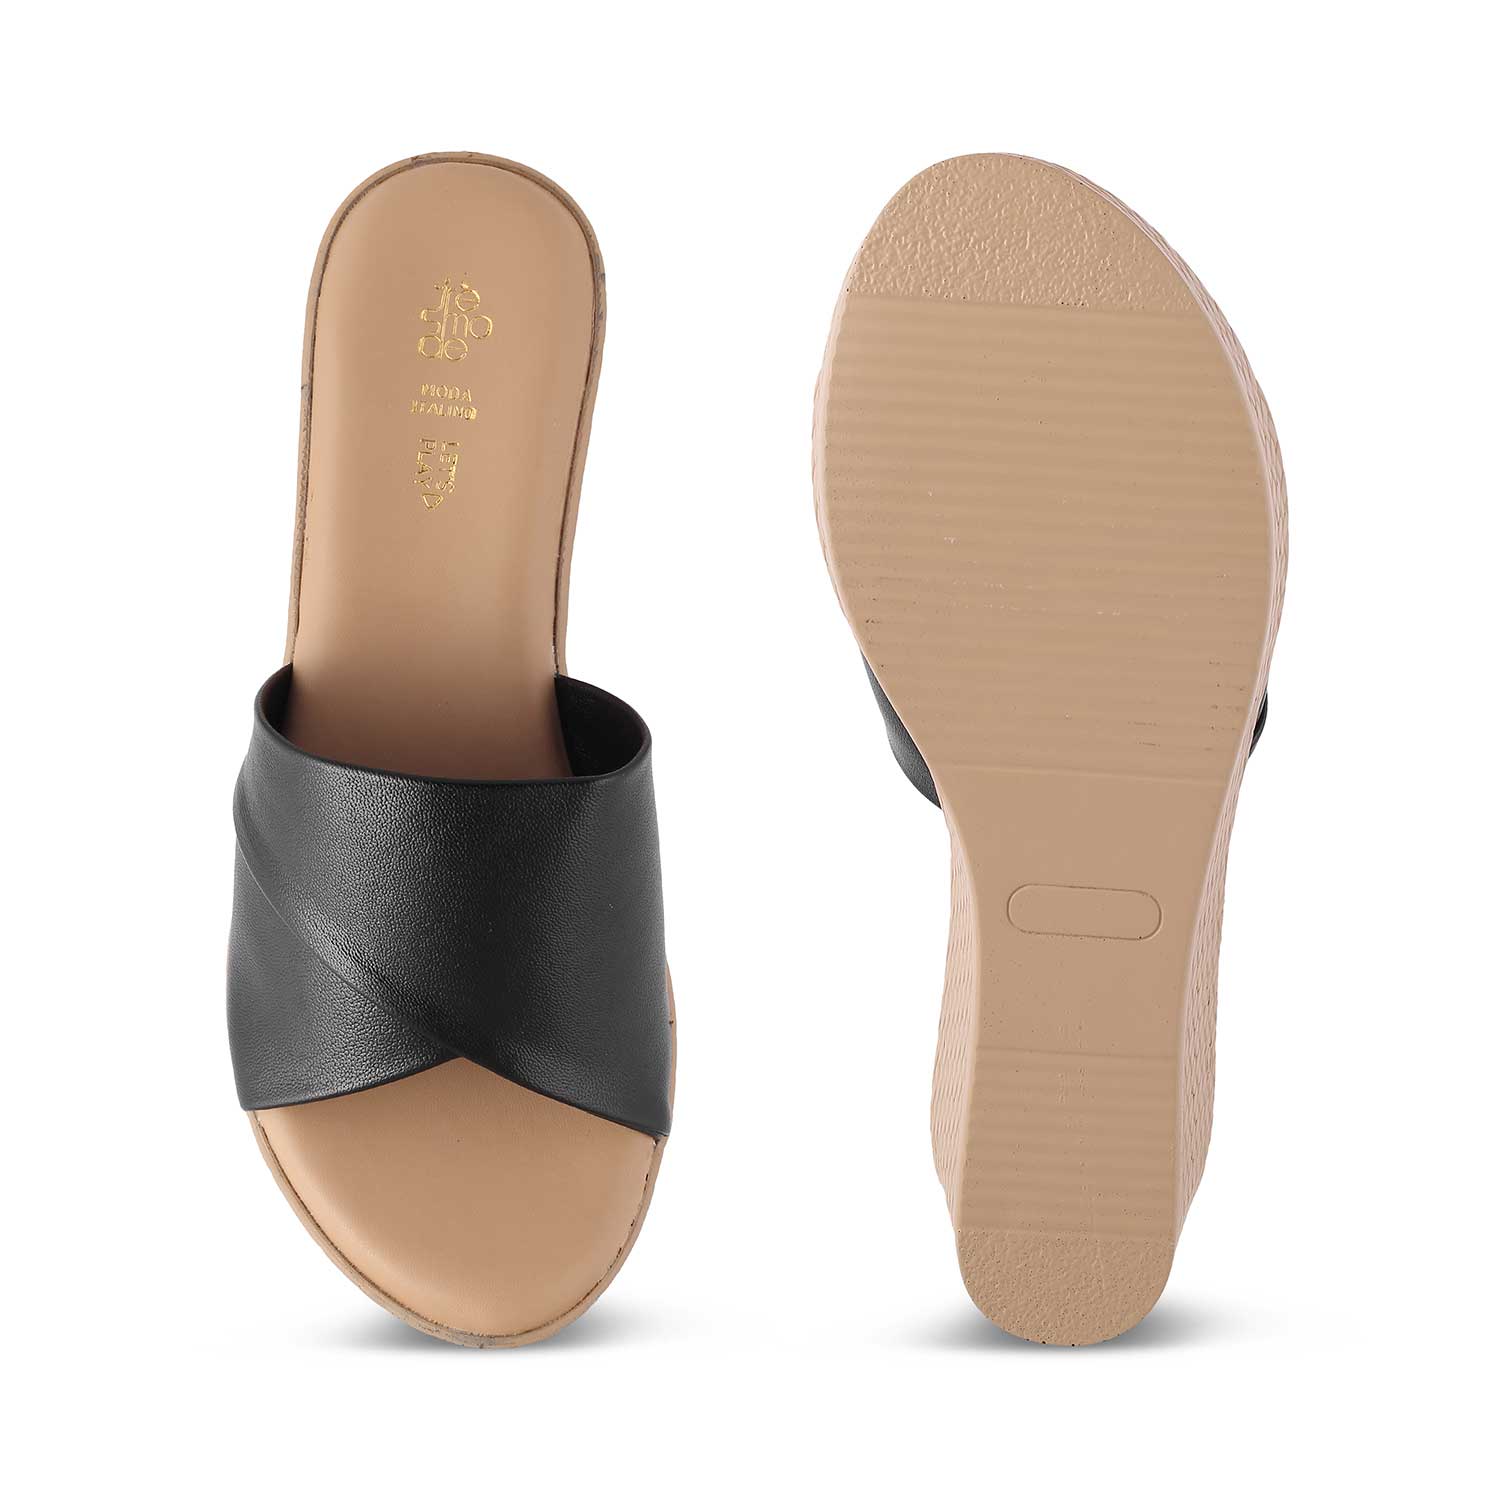 The Sedge Black Women's Casual Wedge Sandals Tresmode